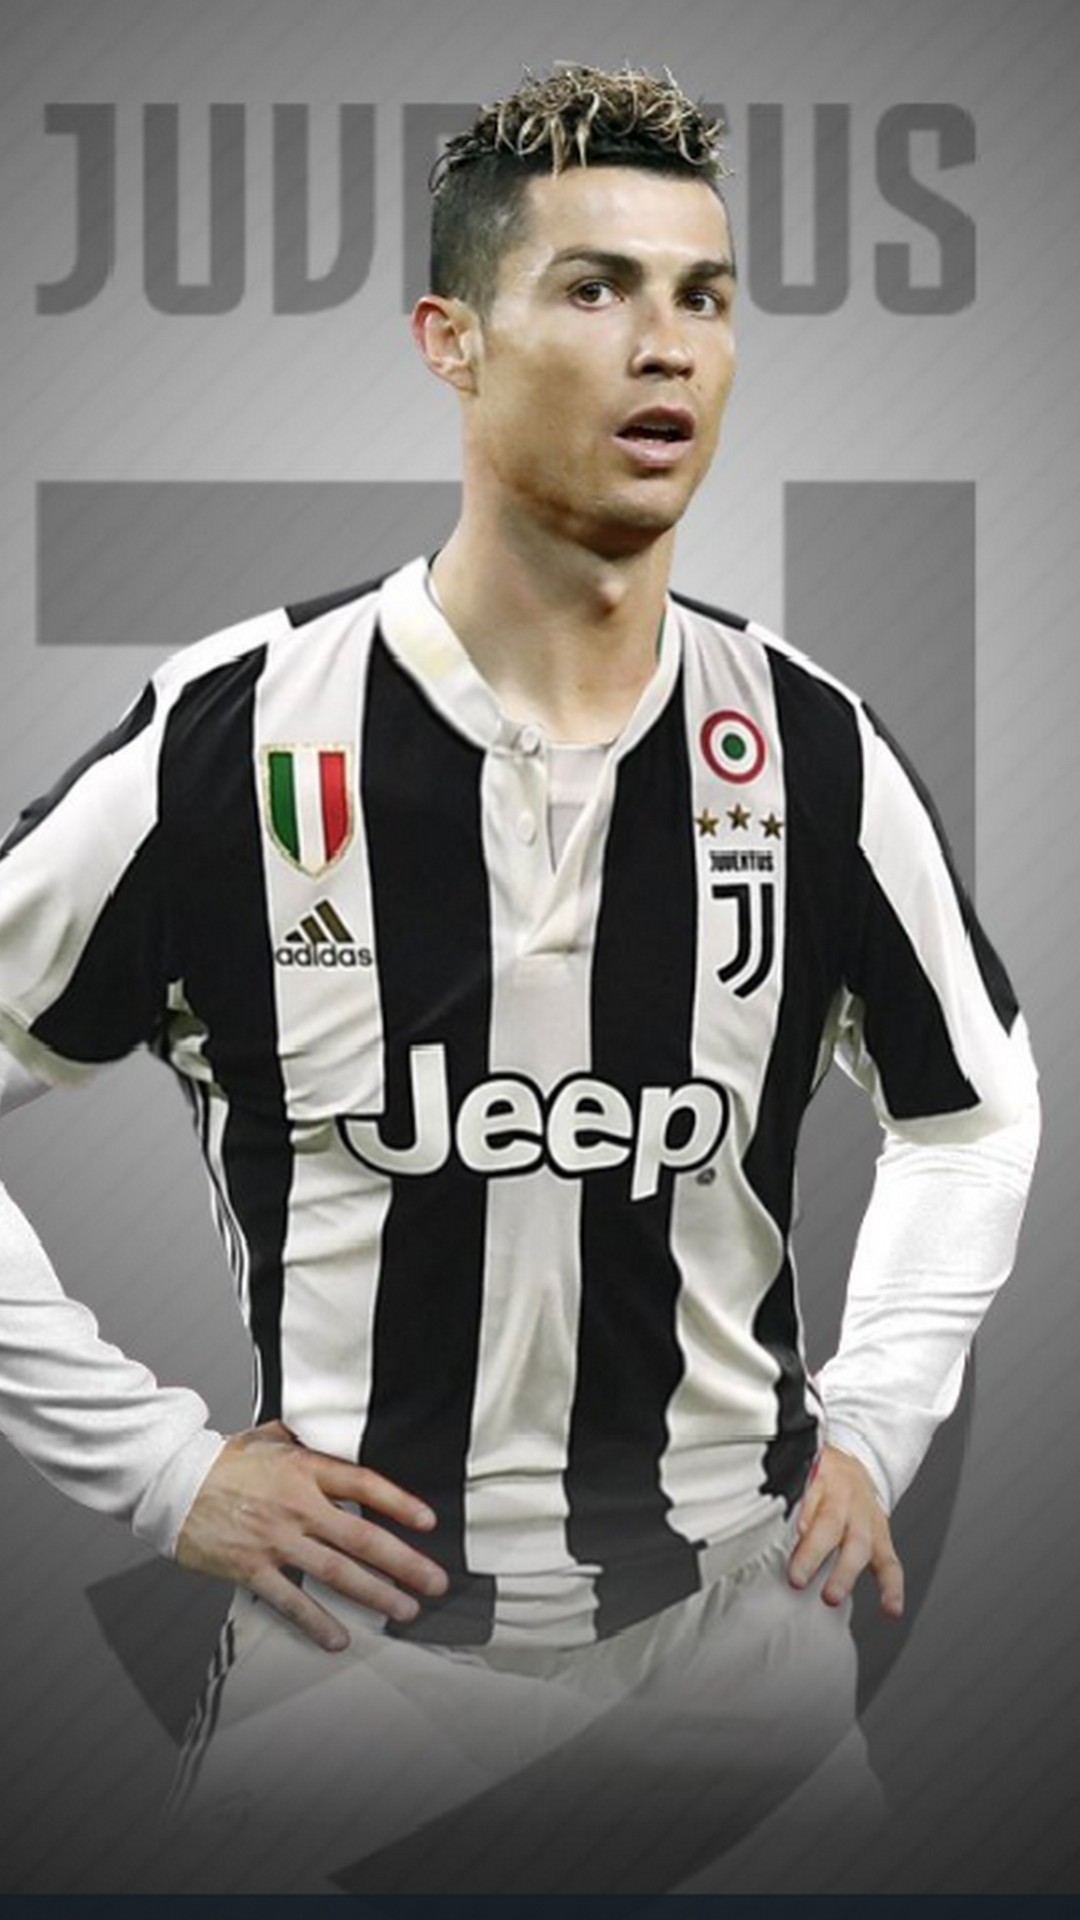 Wallpaper Cristiano Ronaldo Juventus Android   2020 Android Wallpapers